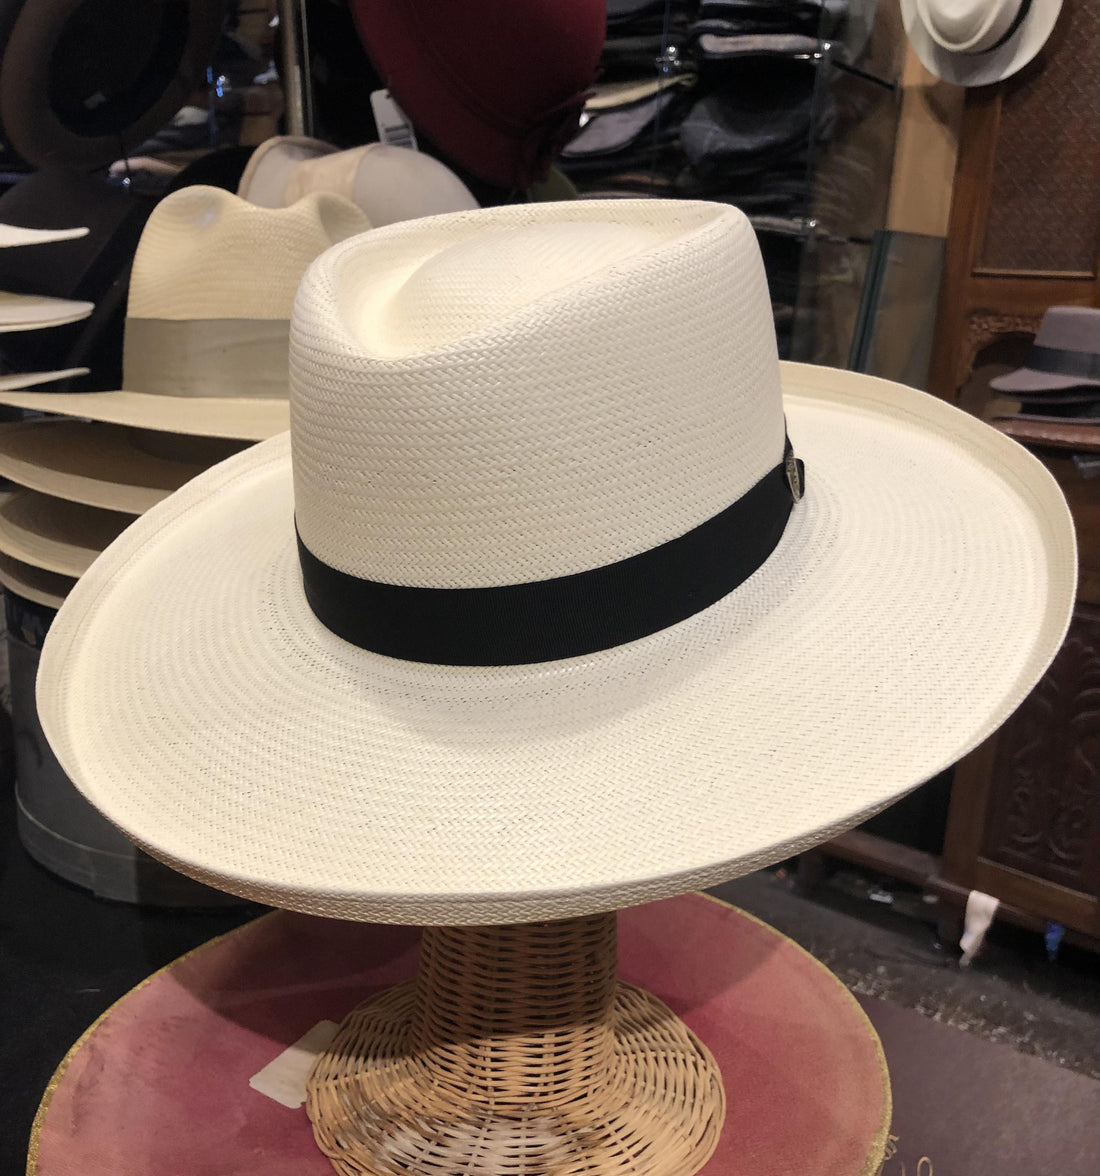 Plantation Style Hat by Dobbs  The San Juan